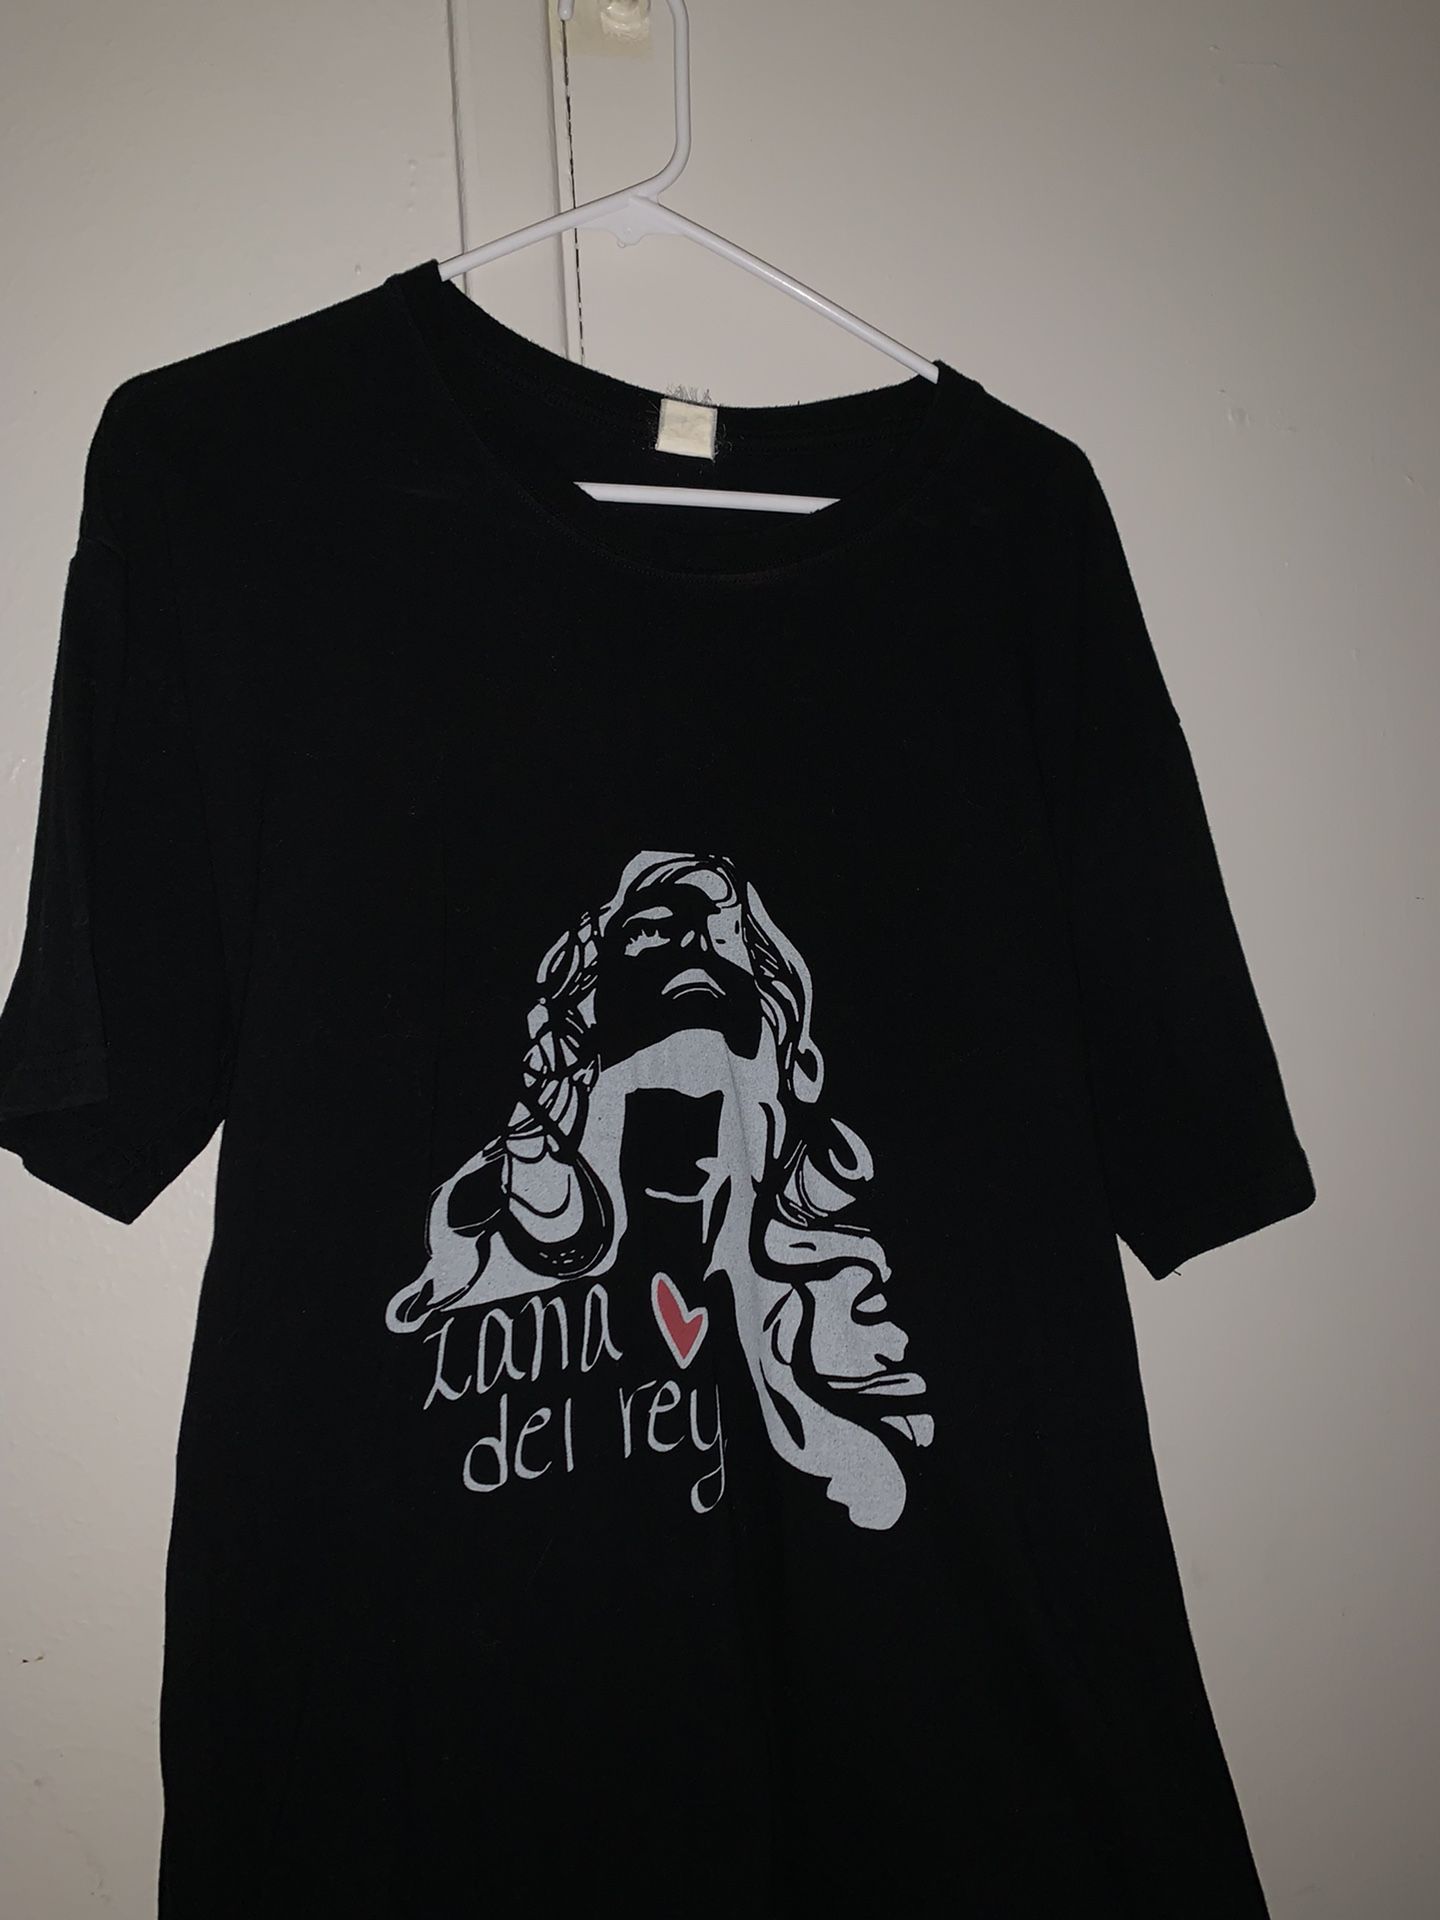 Vintage Lana Del Rey concert T Shirt XL